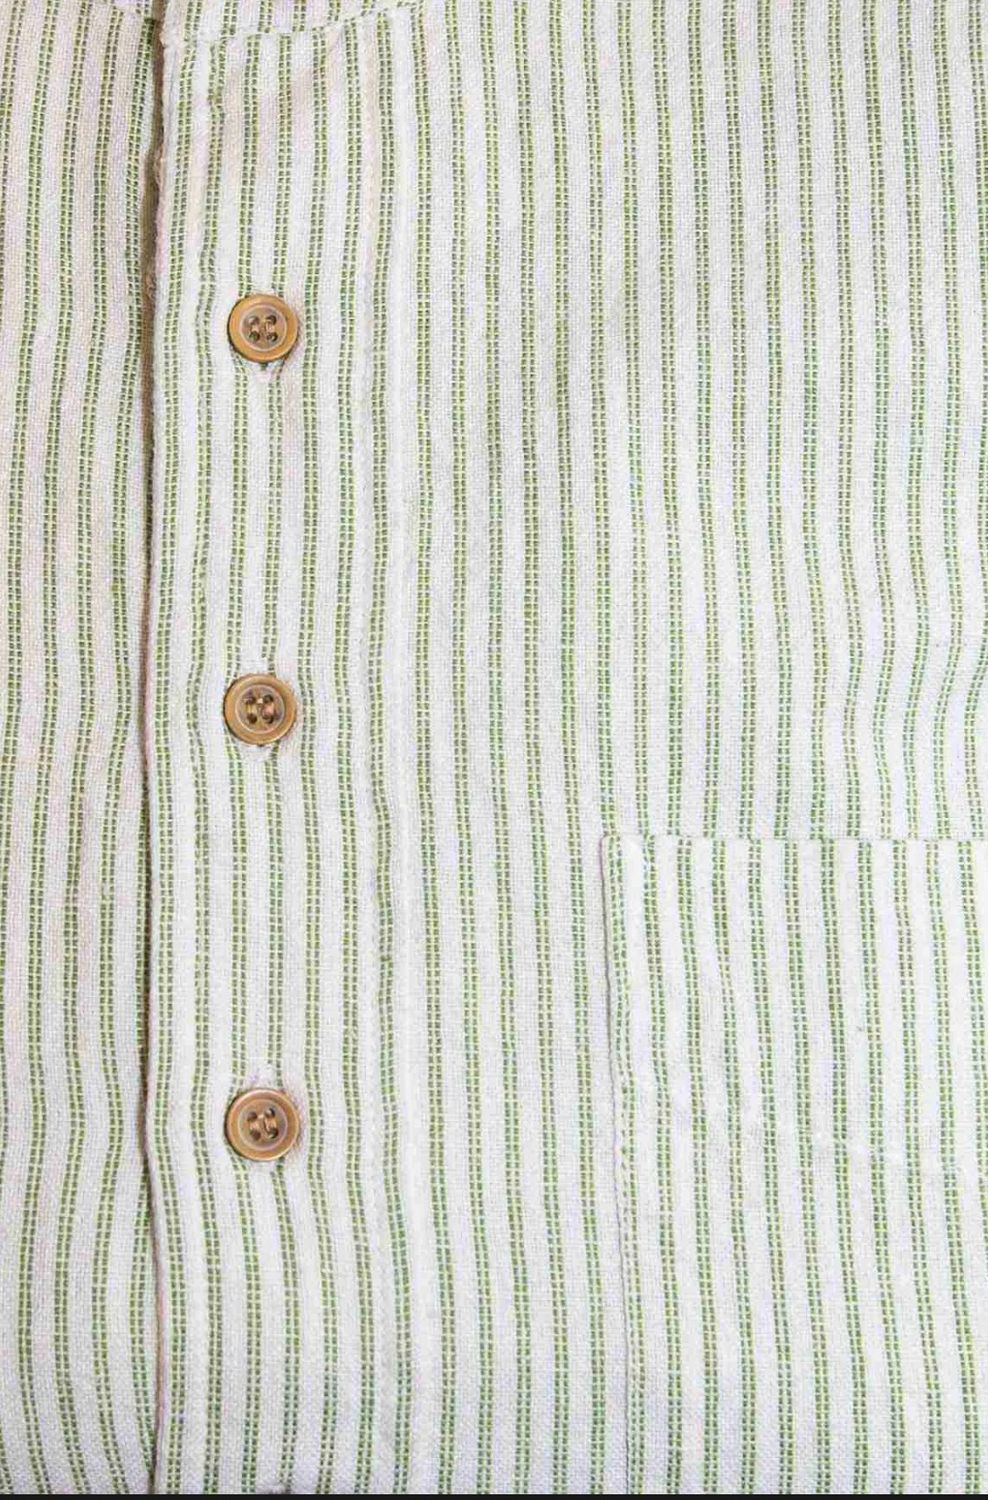 Emerald Isle Grandfather Shirt- Cream with Green Stripe, Size: XS